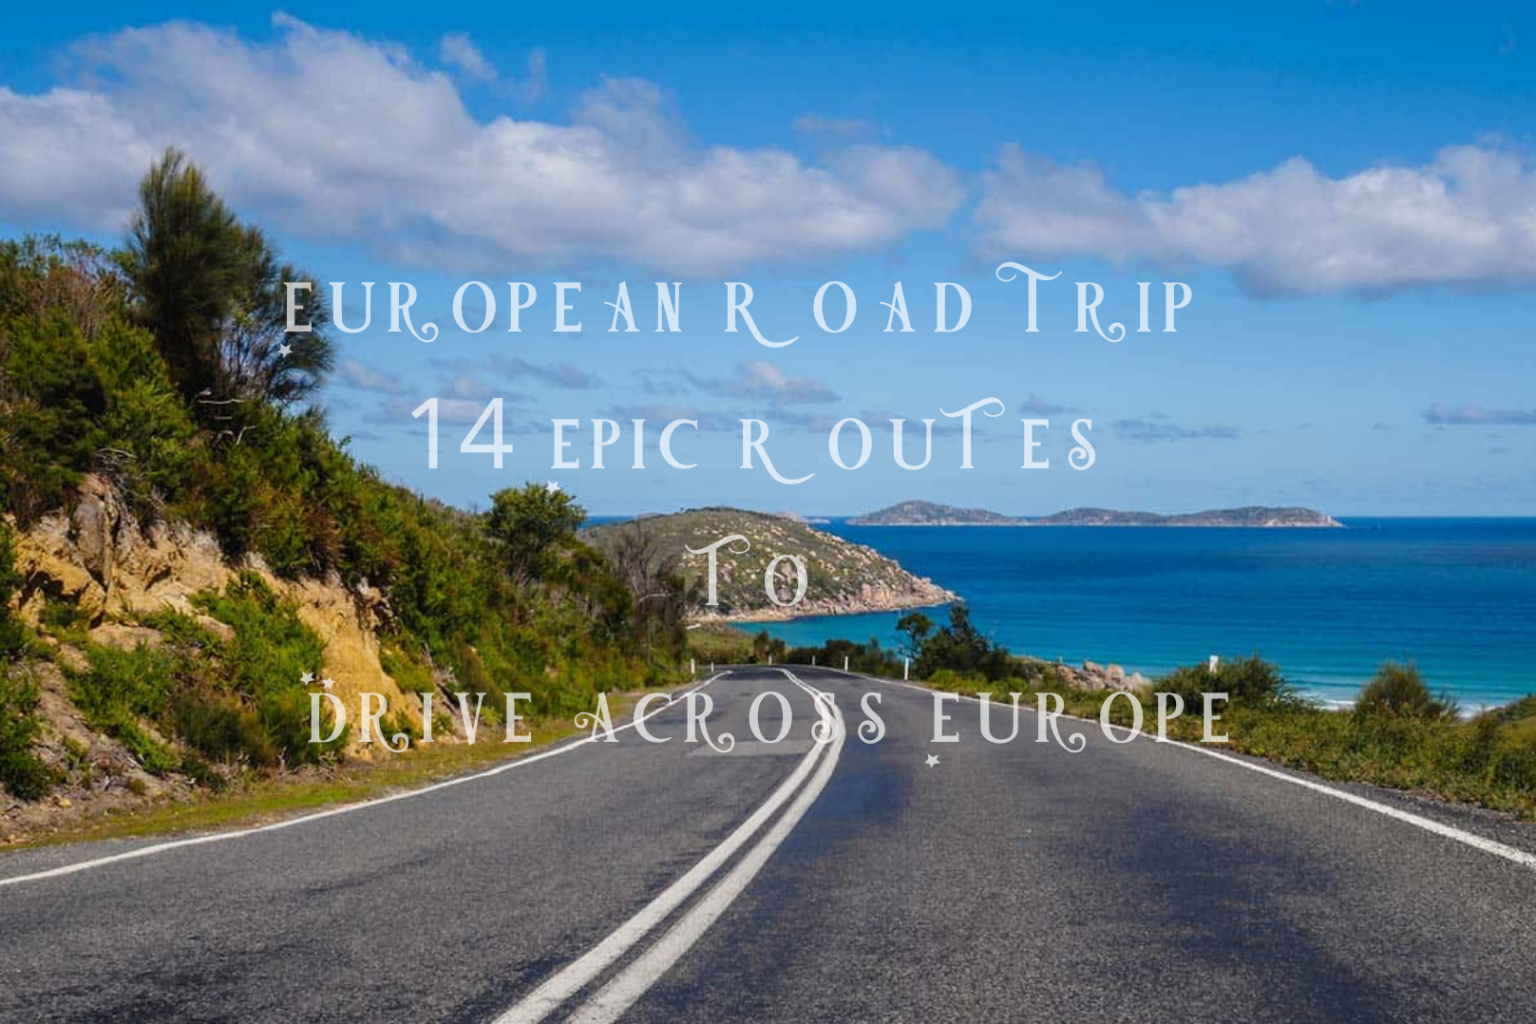 across europe trip